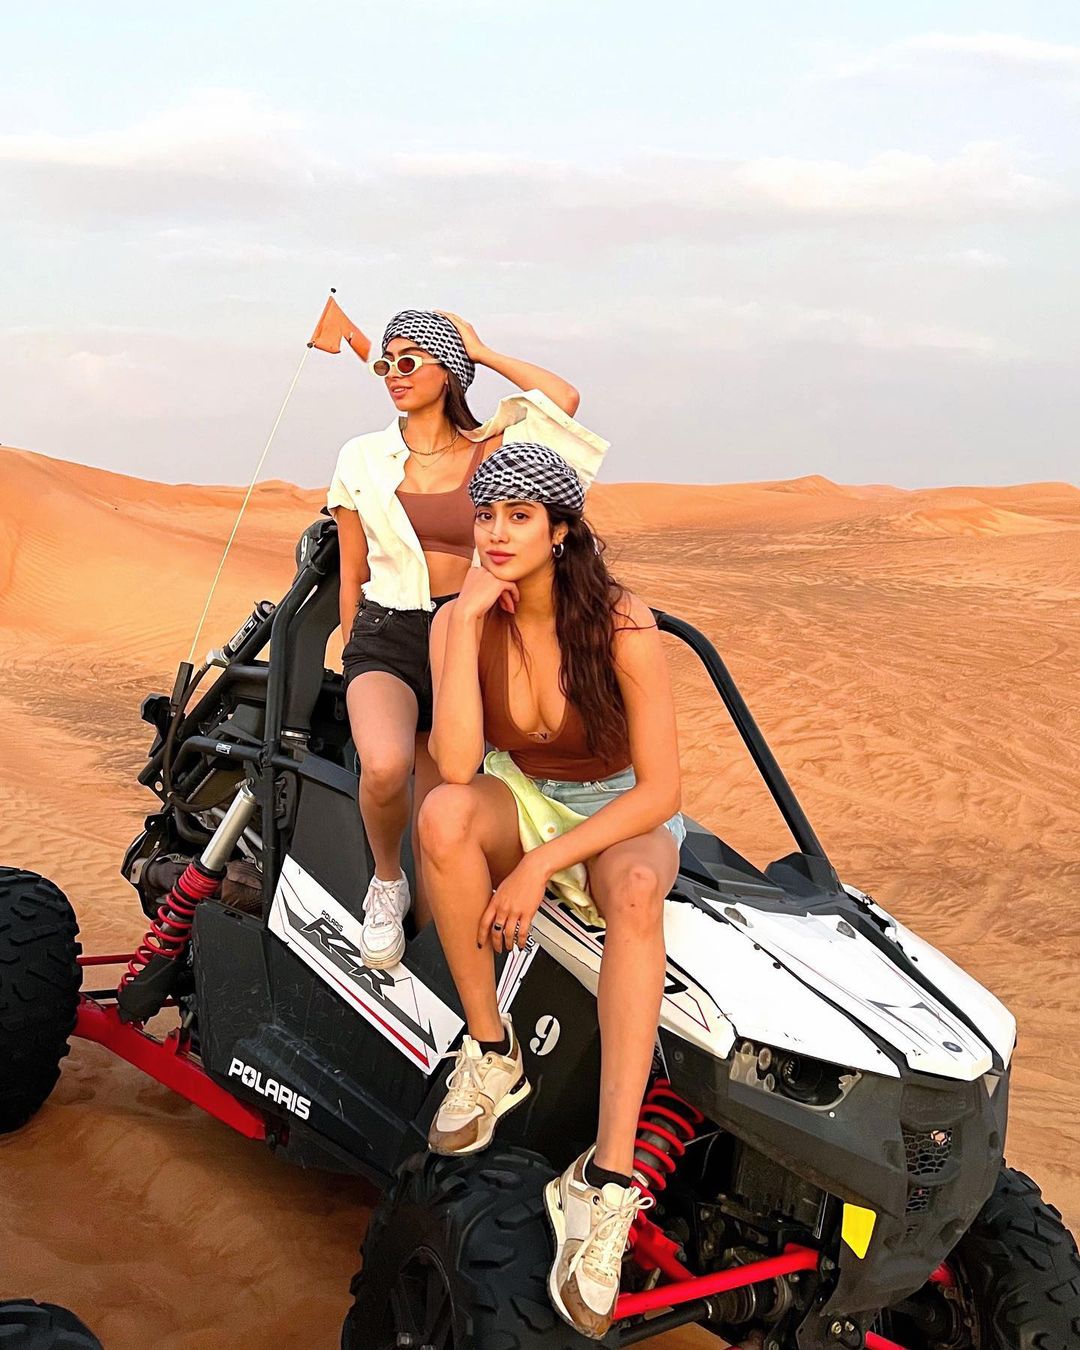 Janhvi and Khushi Kapoor look gorgeous in their desert safari